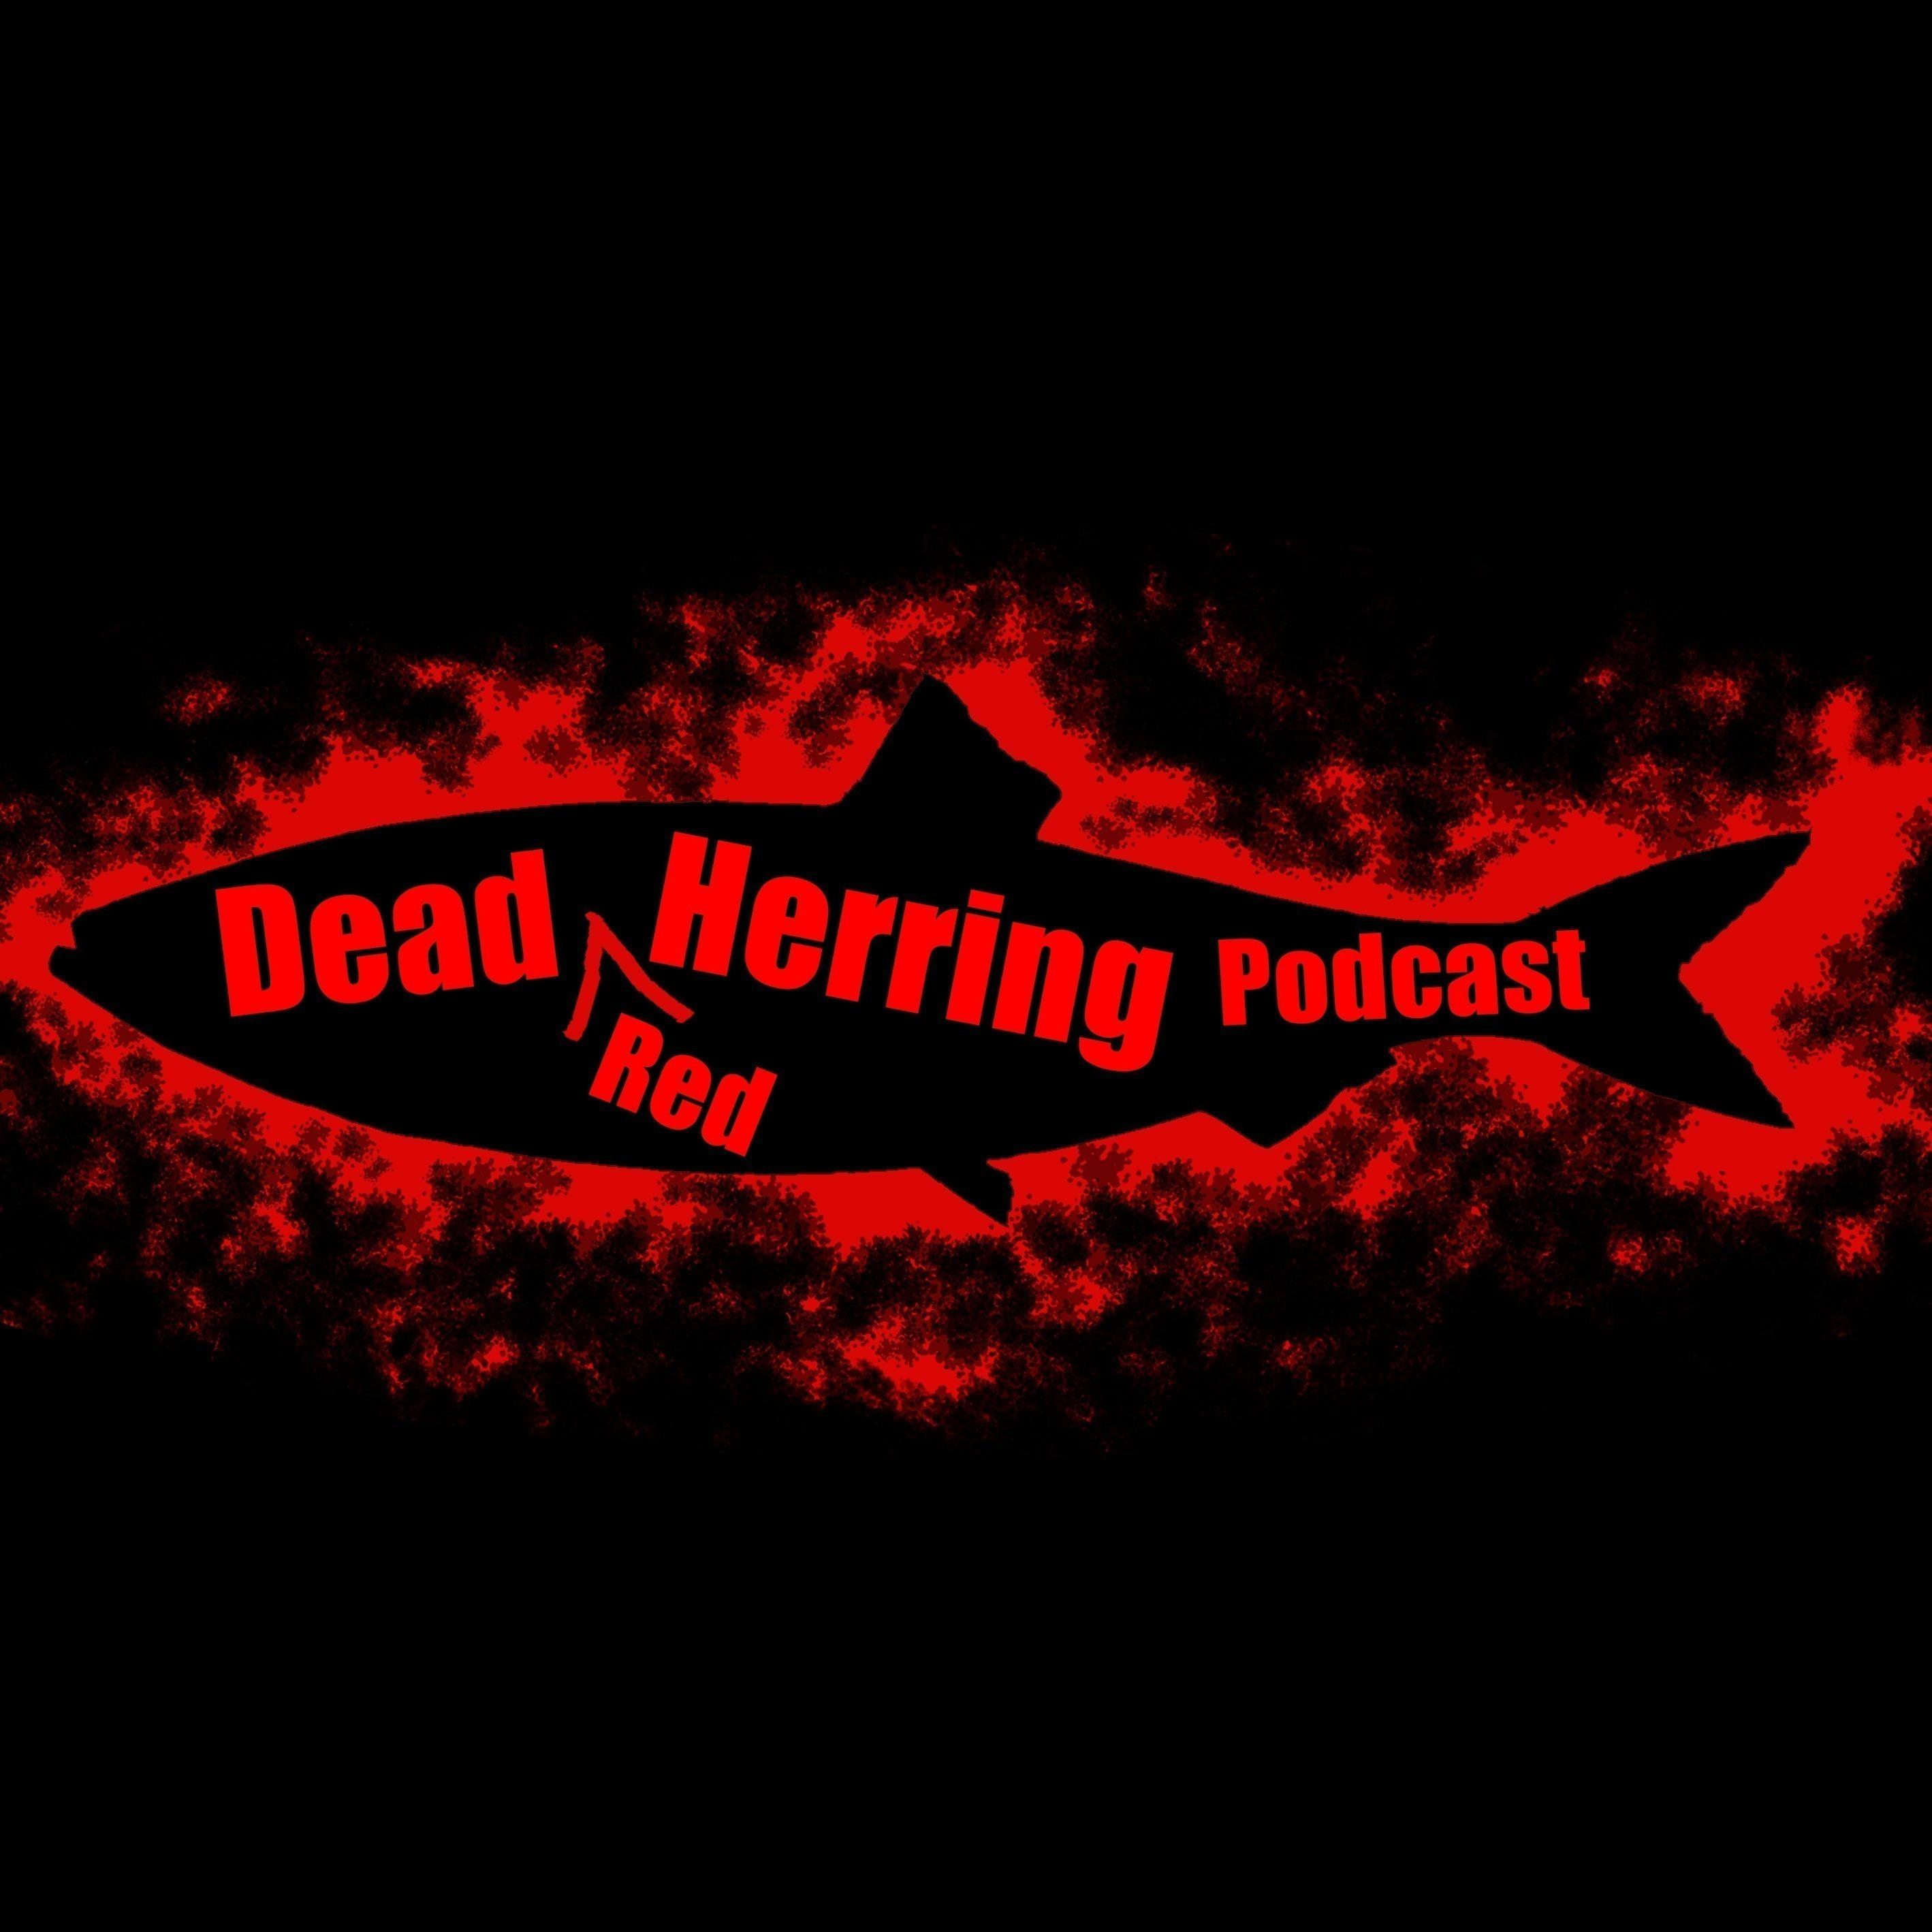 Dead Red Herring Podcast